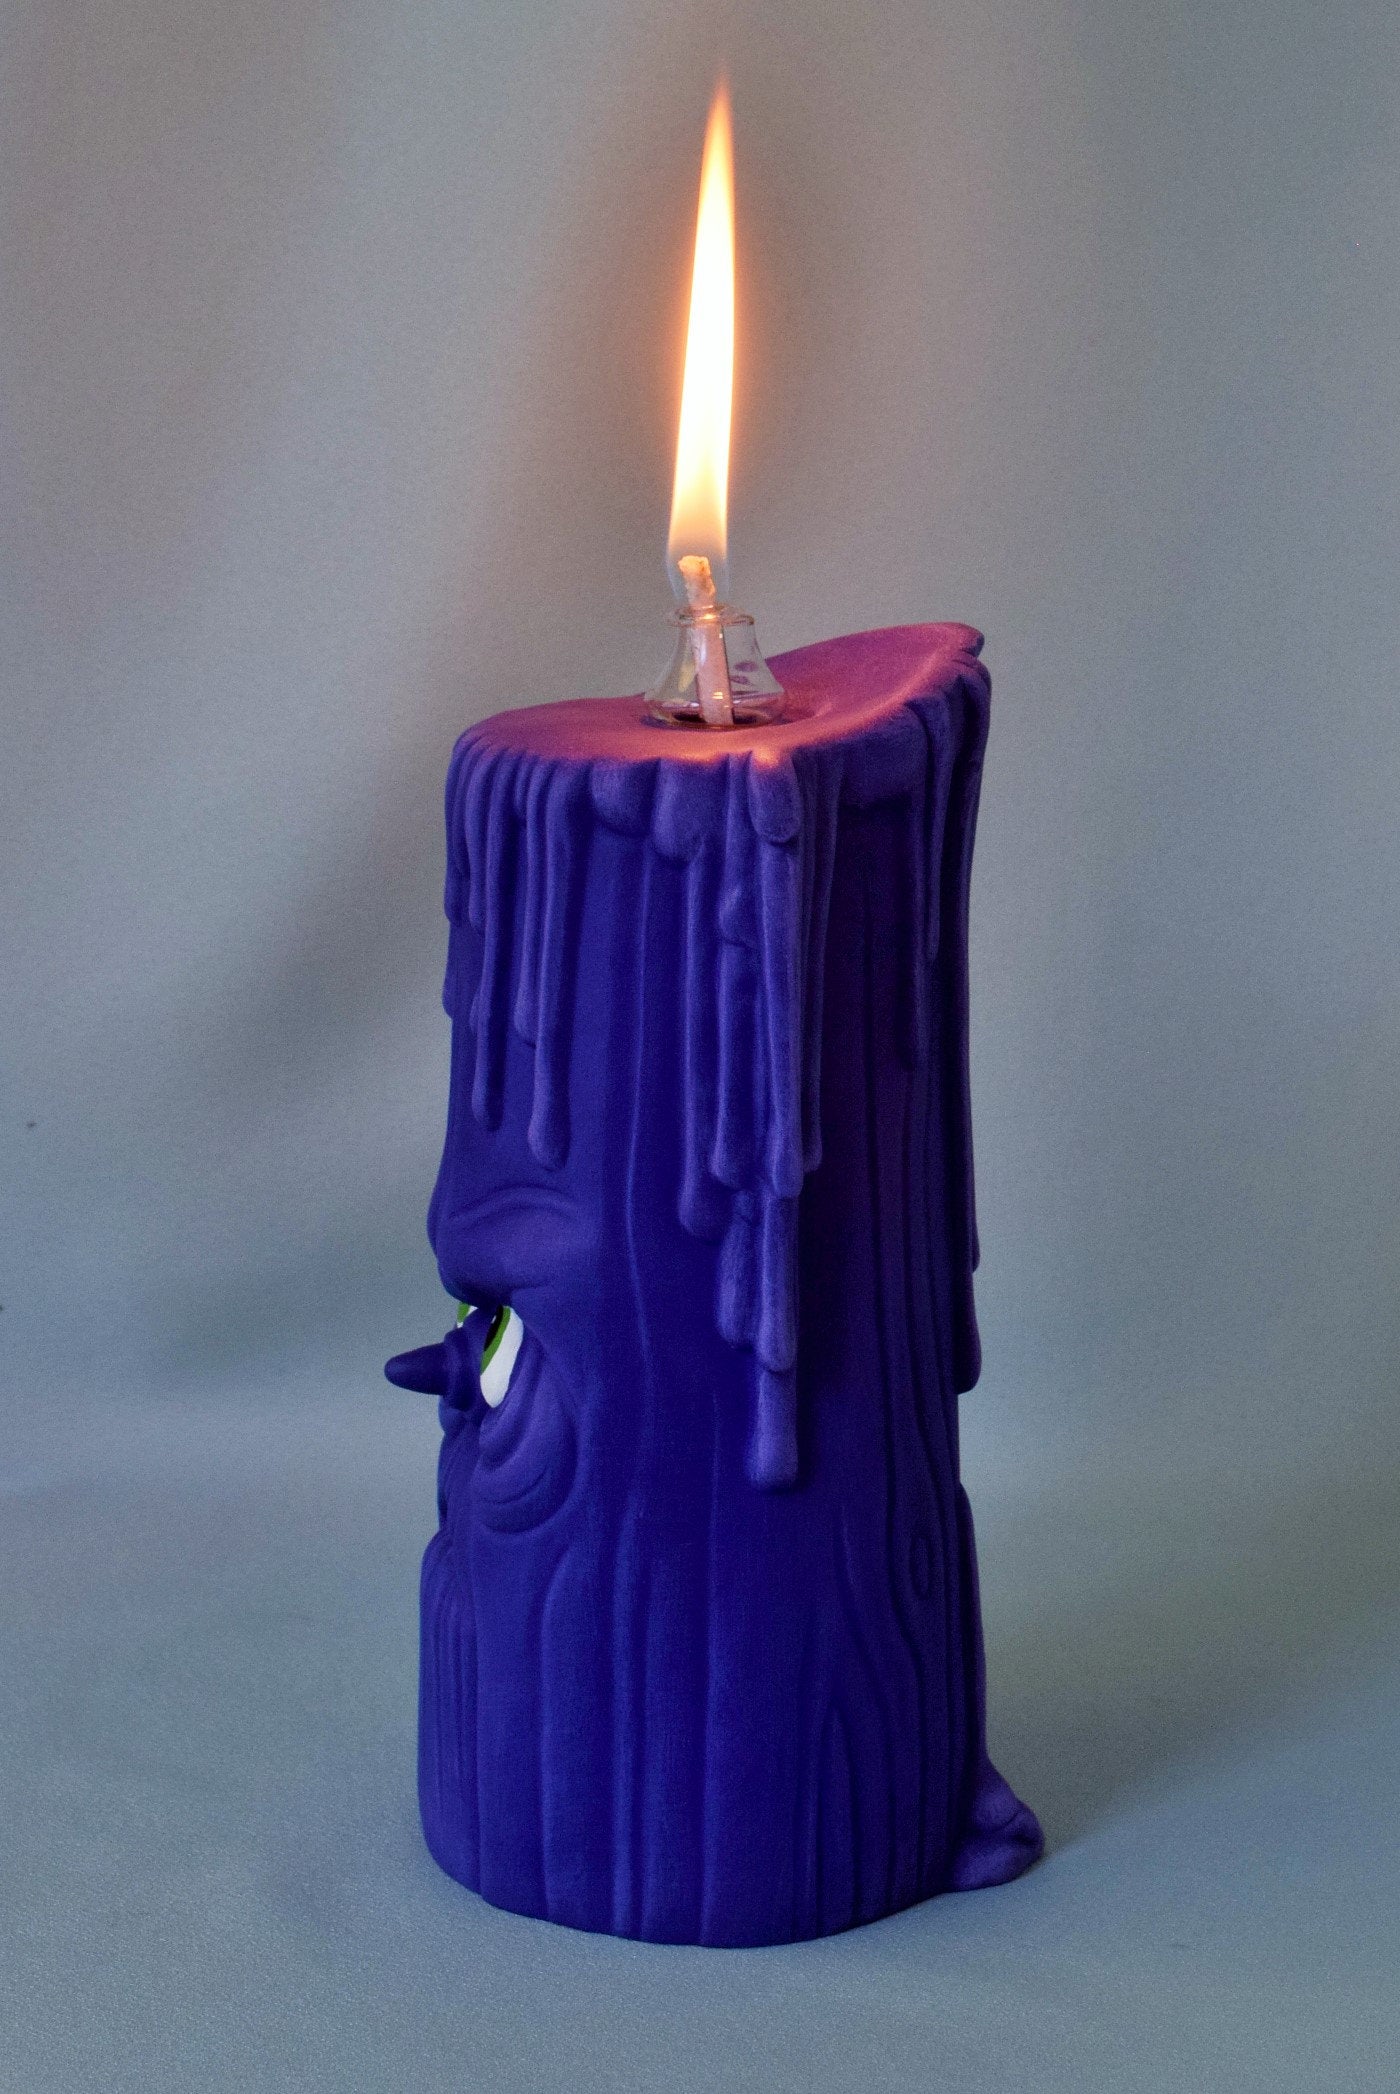 Ceramic Halloween Candle